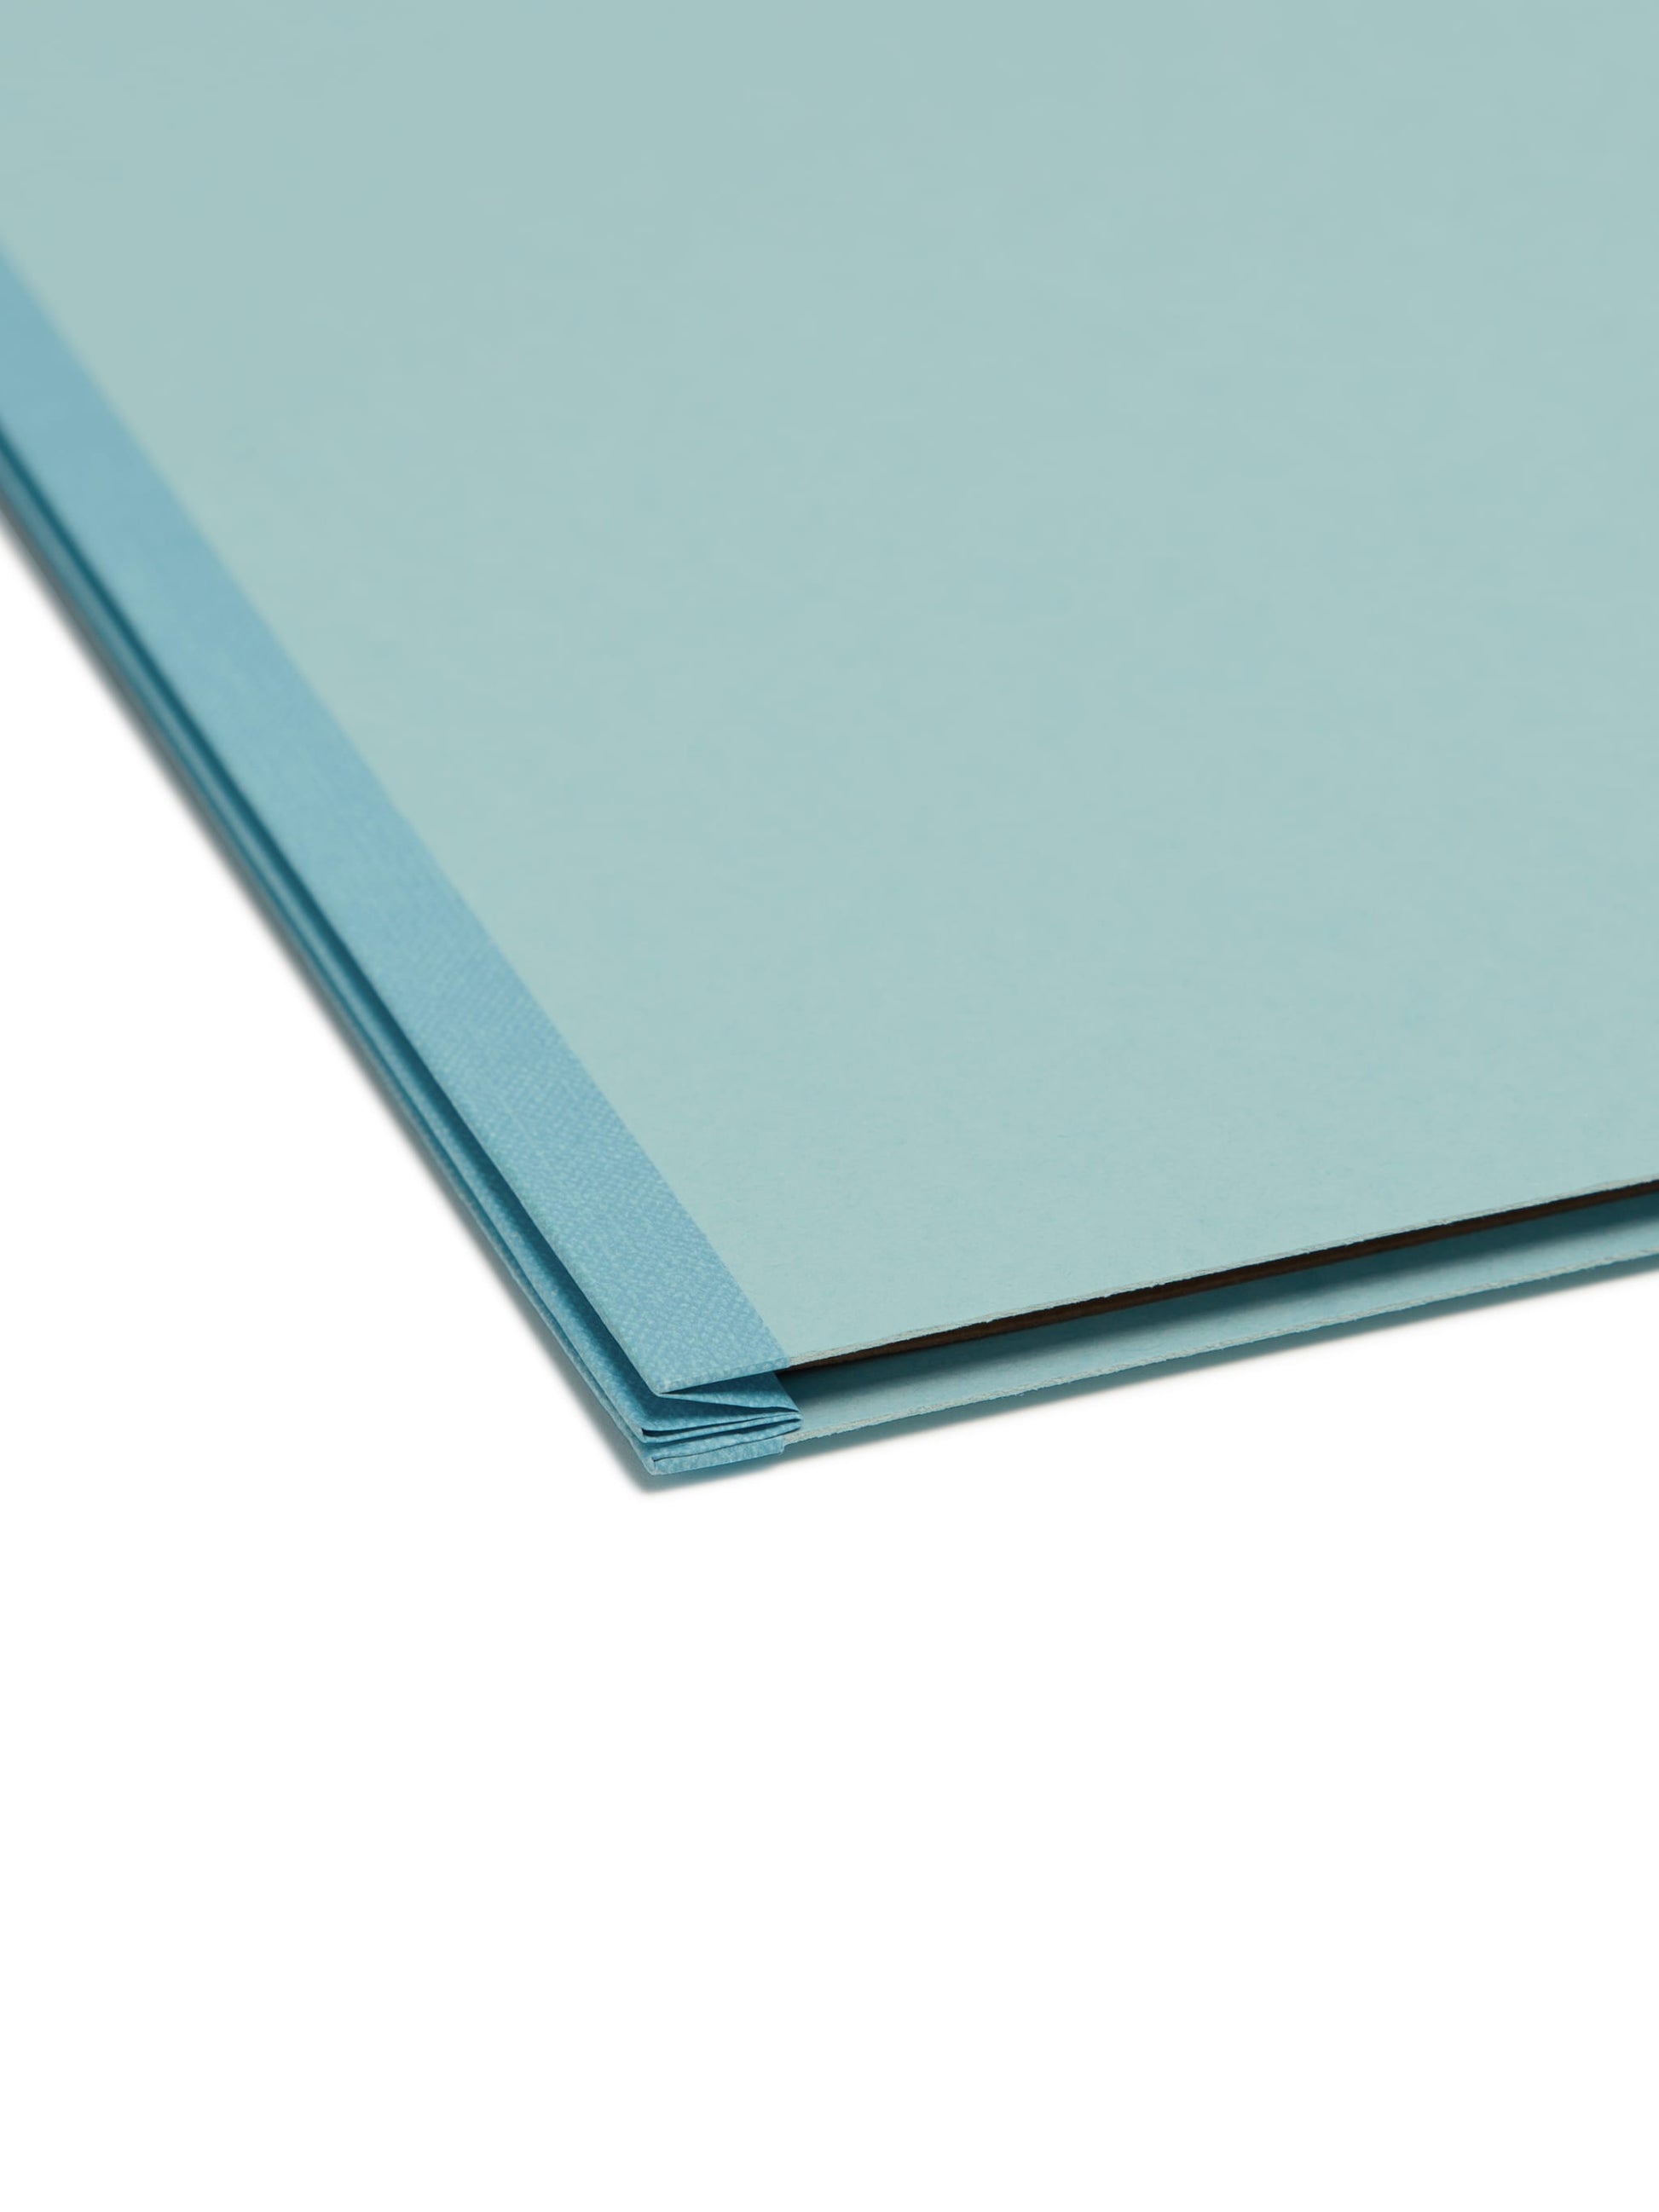 Pressboard Classification File Folders, 3 Dividers, 3 inch Expansion, Blue Color, Legal Size, Set of 0, 30086486190900